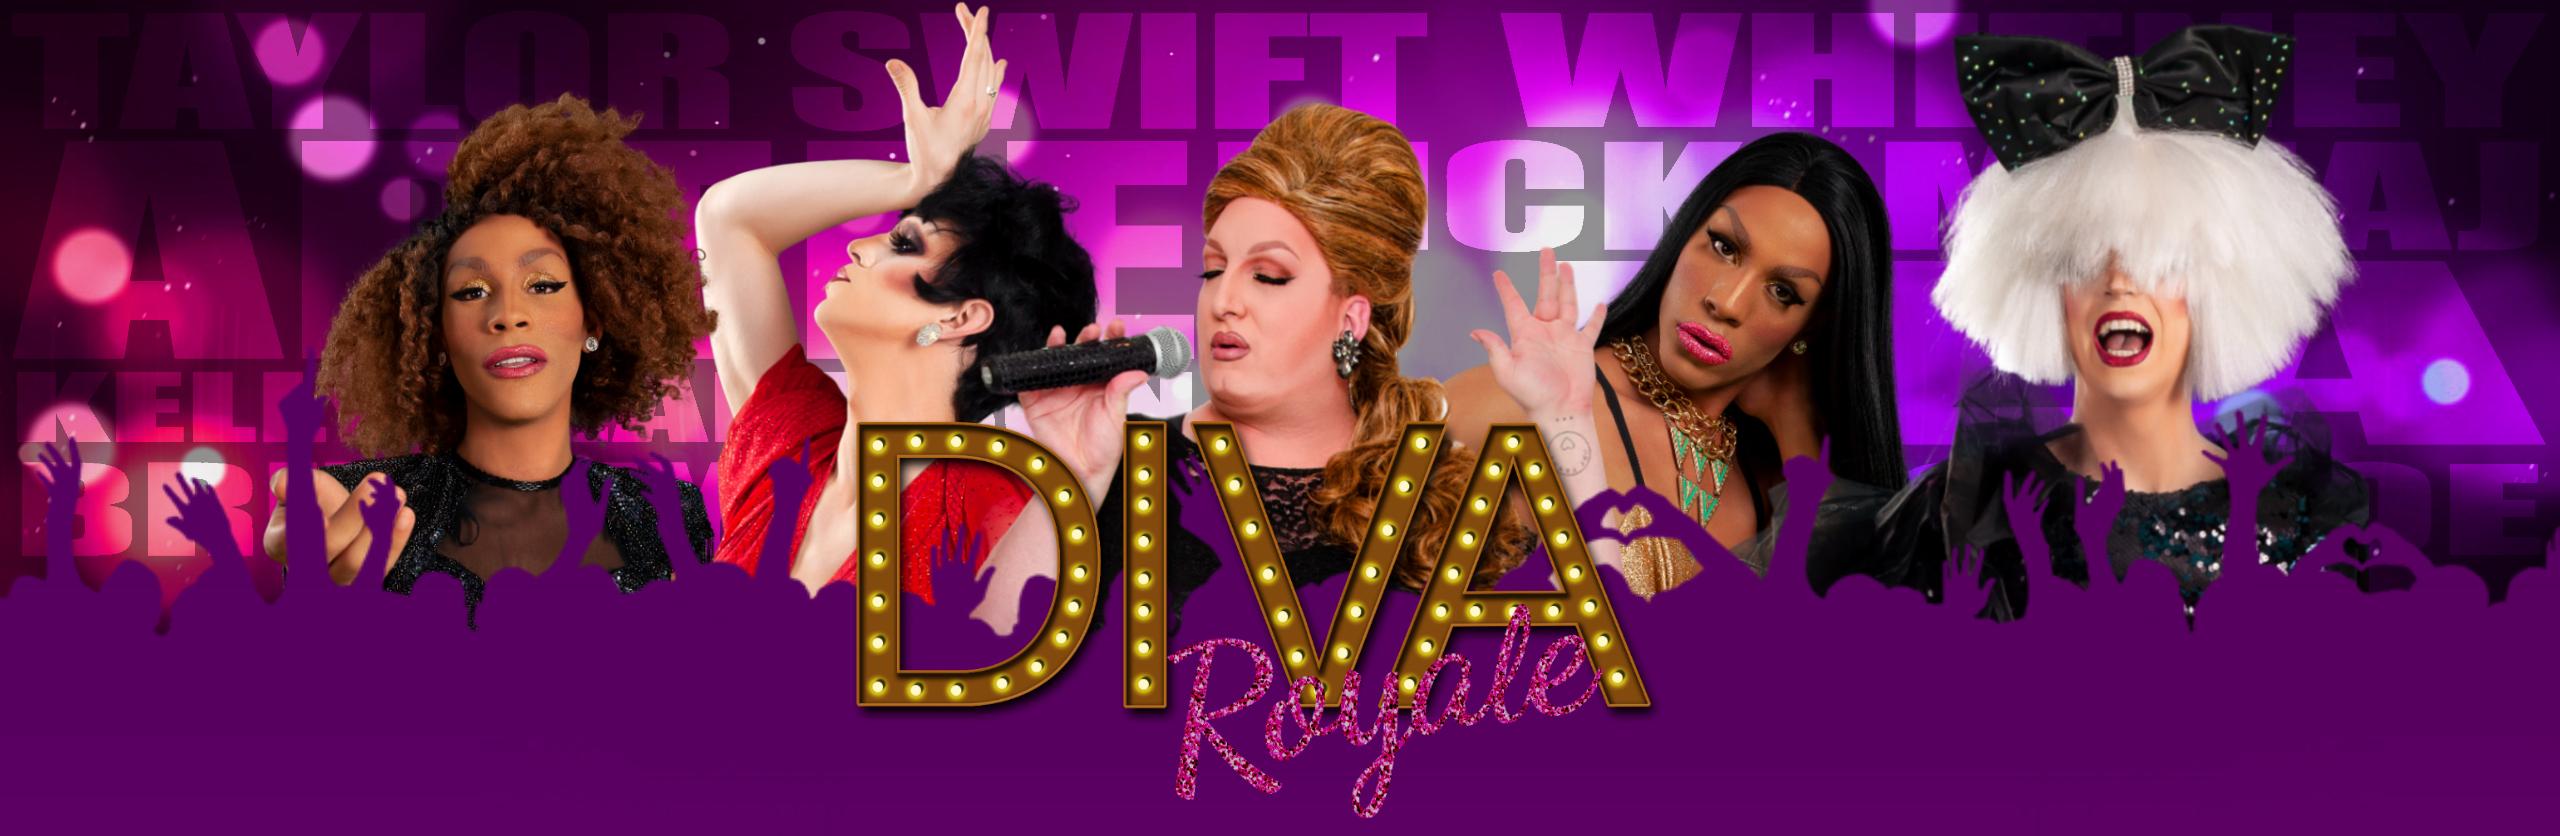 Diva Royale Drag Queen Show Washington, DC - Weekly Drag Queen Shows